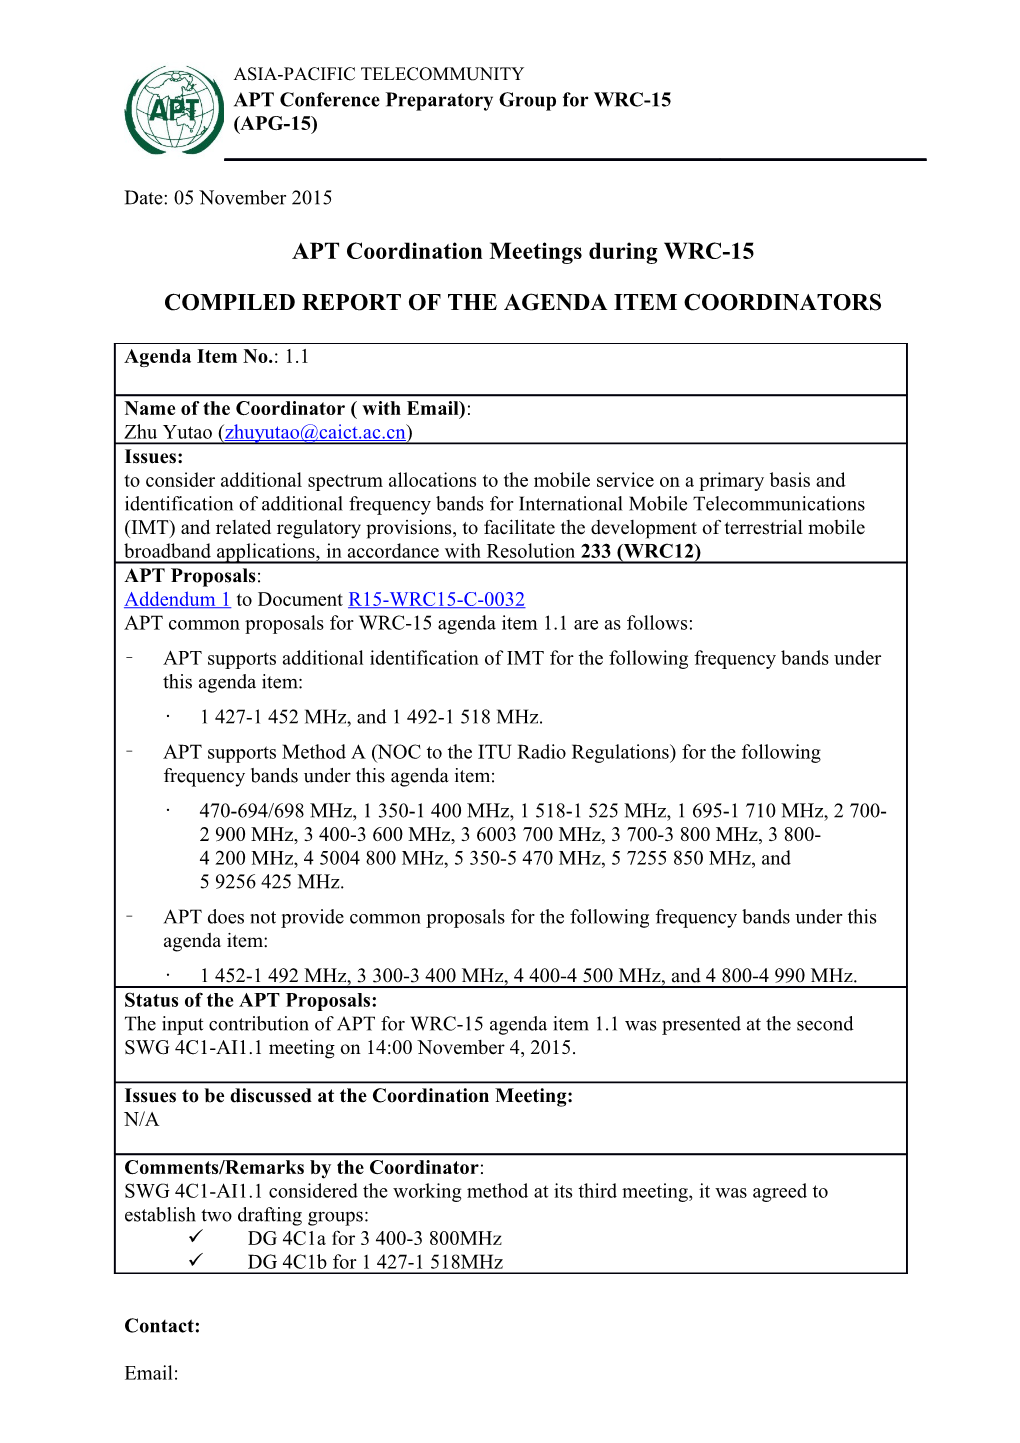 APT Coordination Meetings During WRC-15